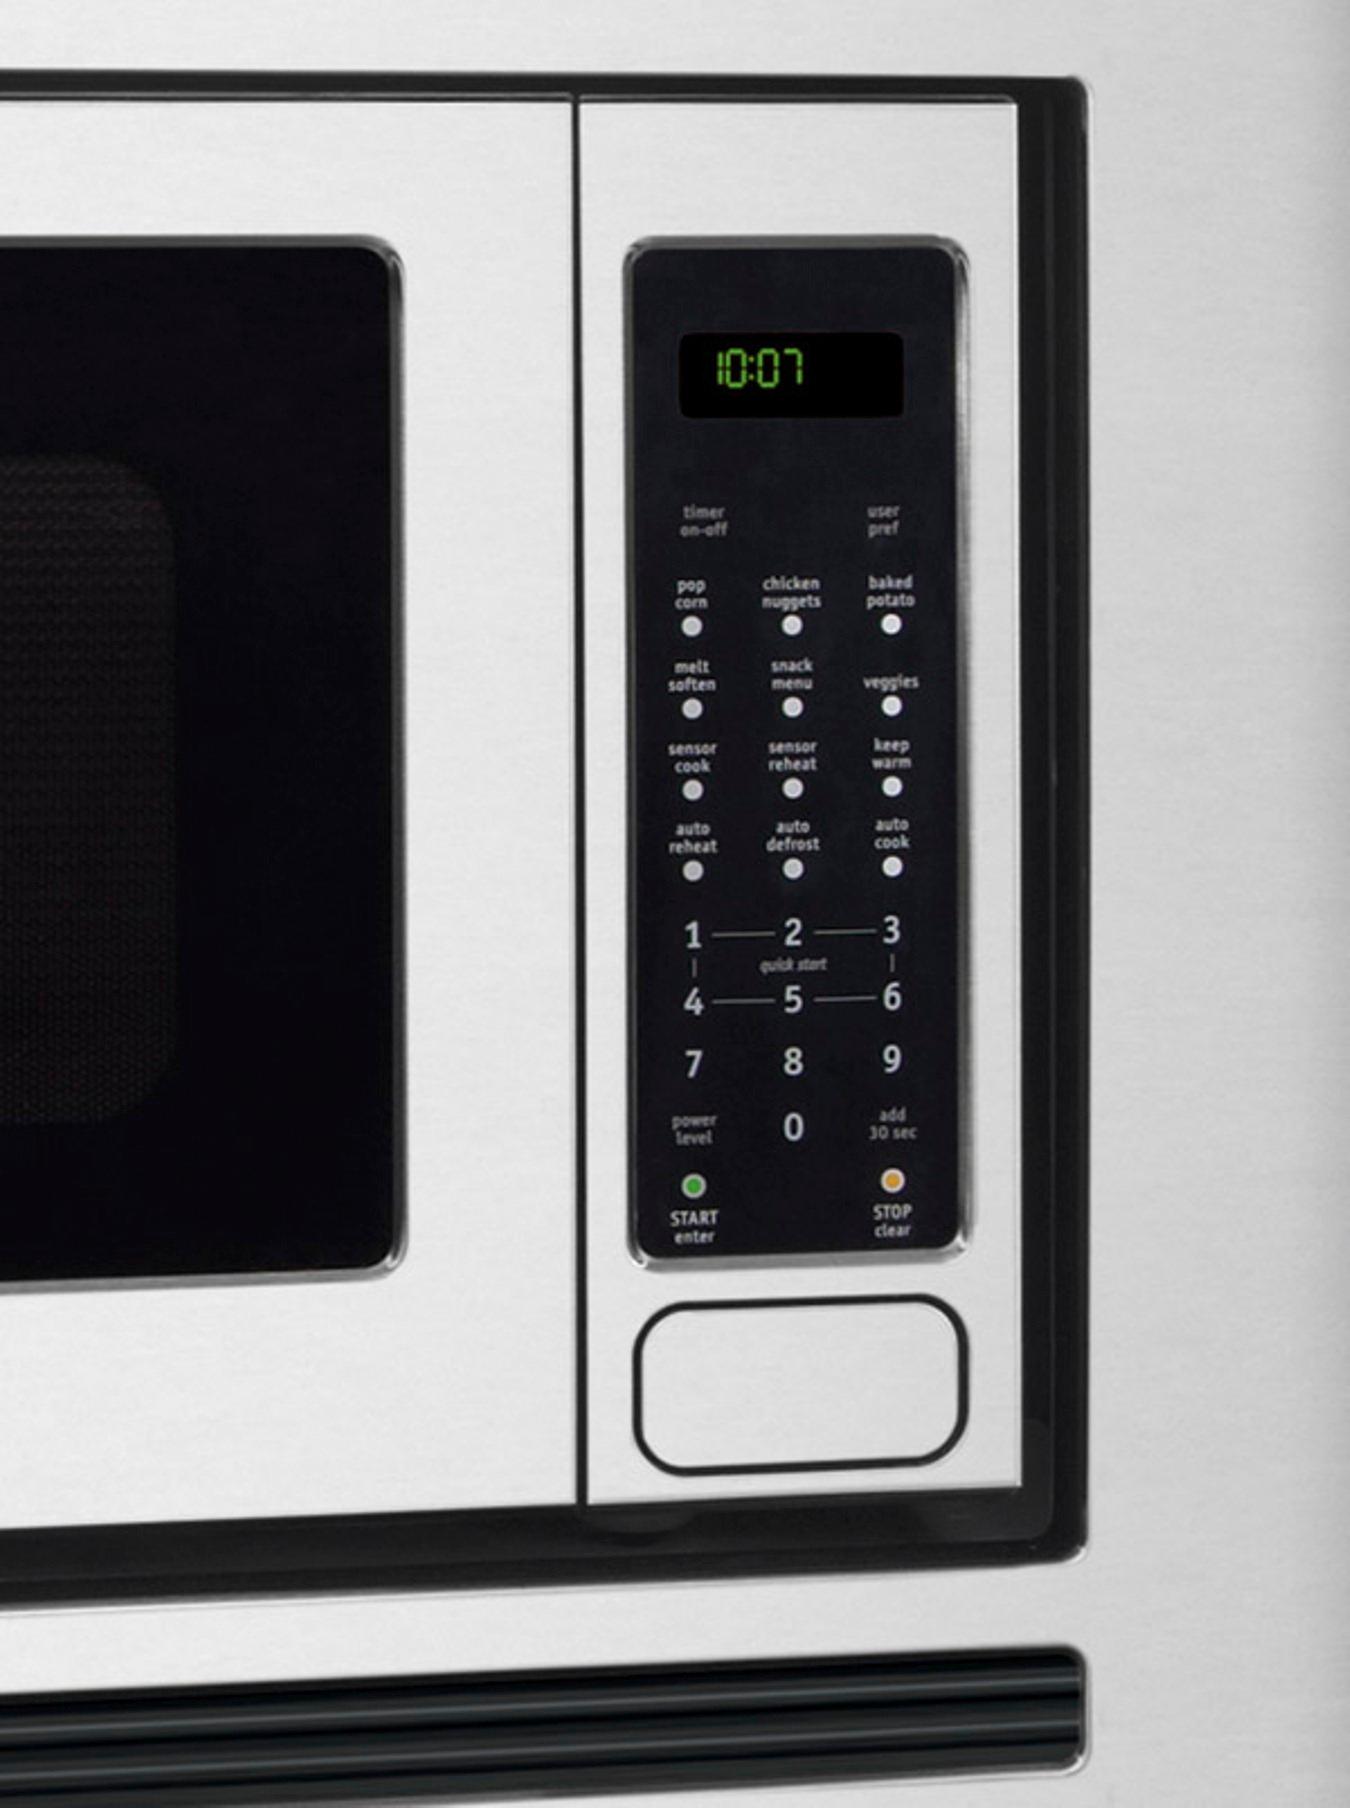 FFCE2278LS Frigidaire Microwave Ovens